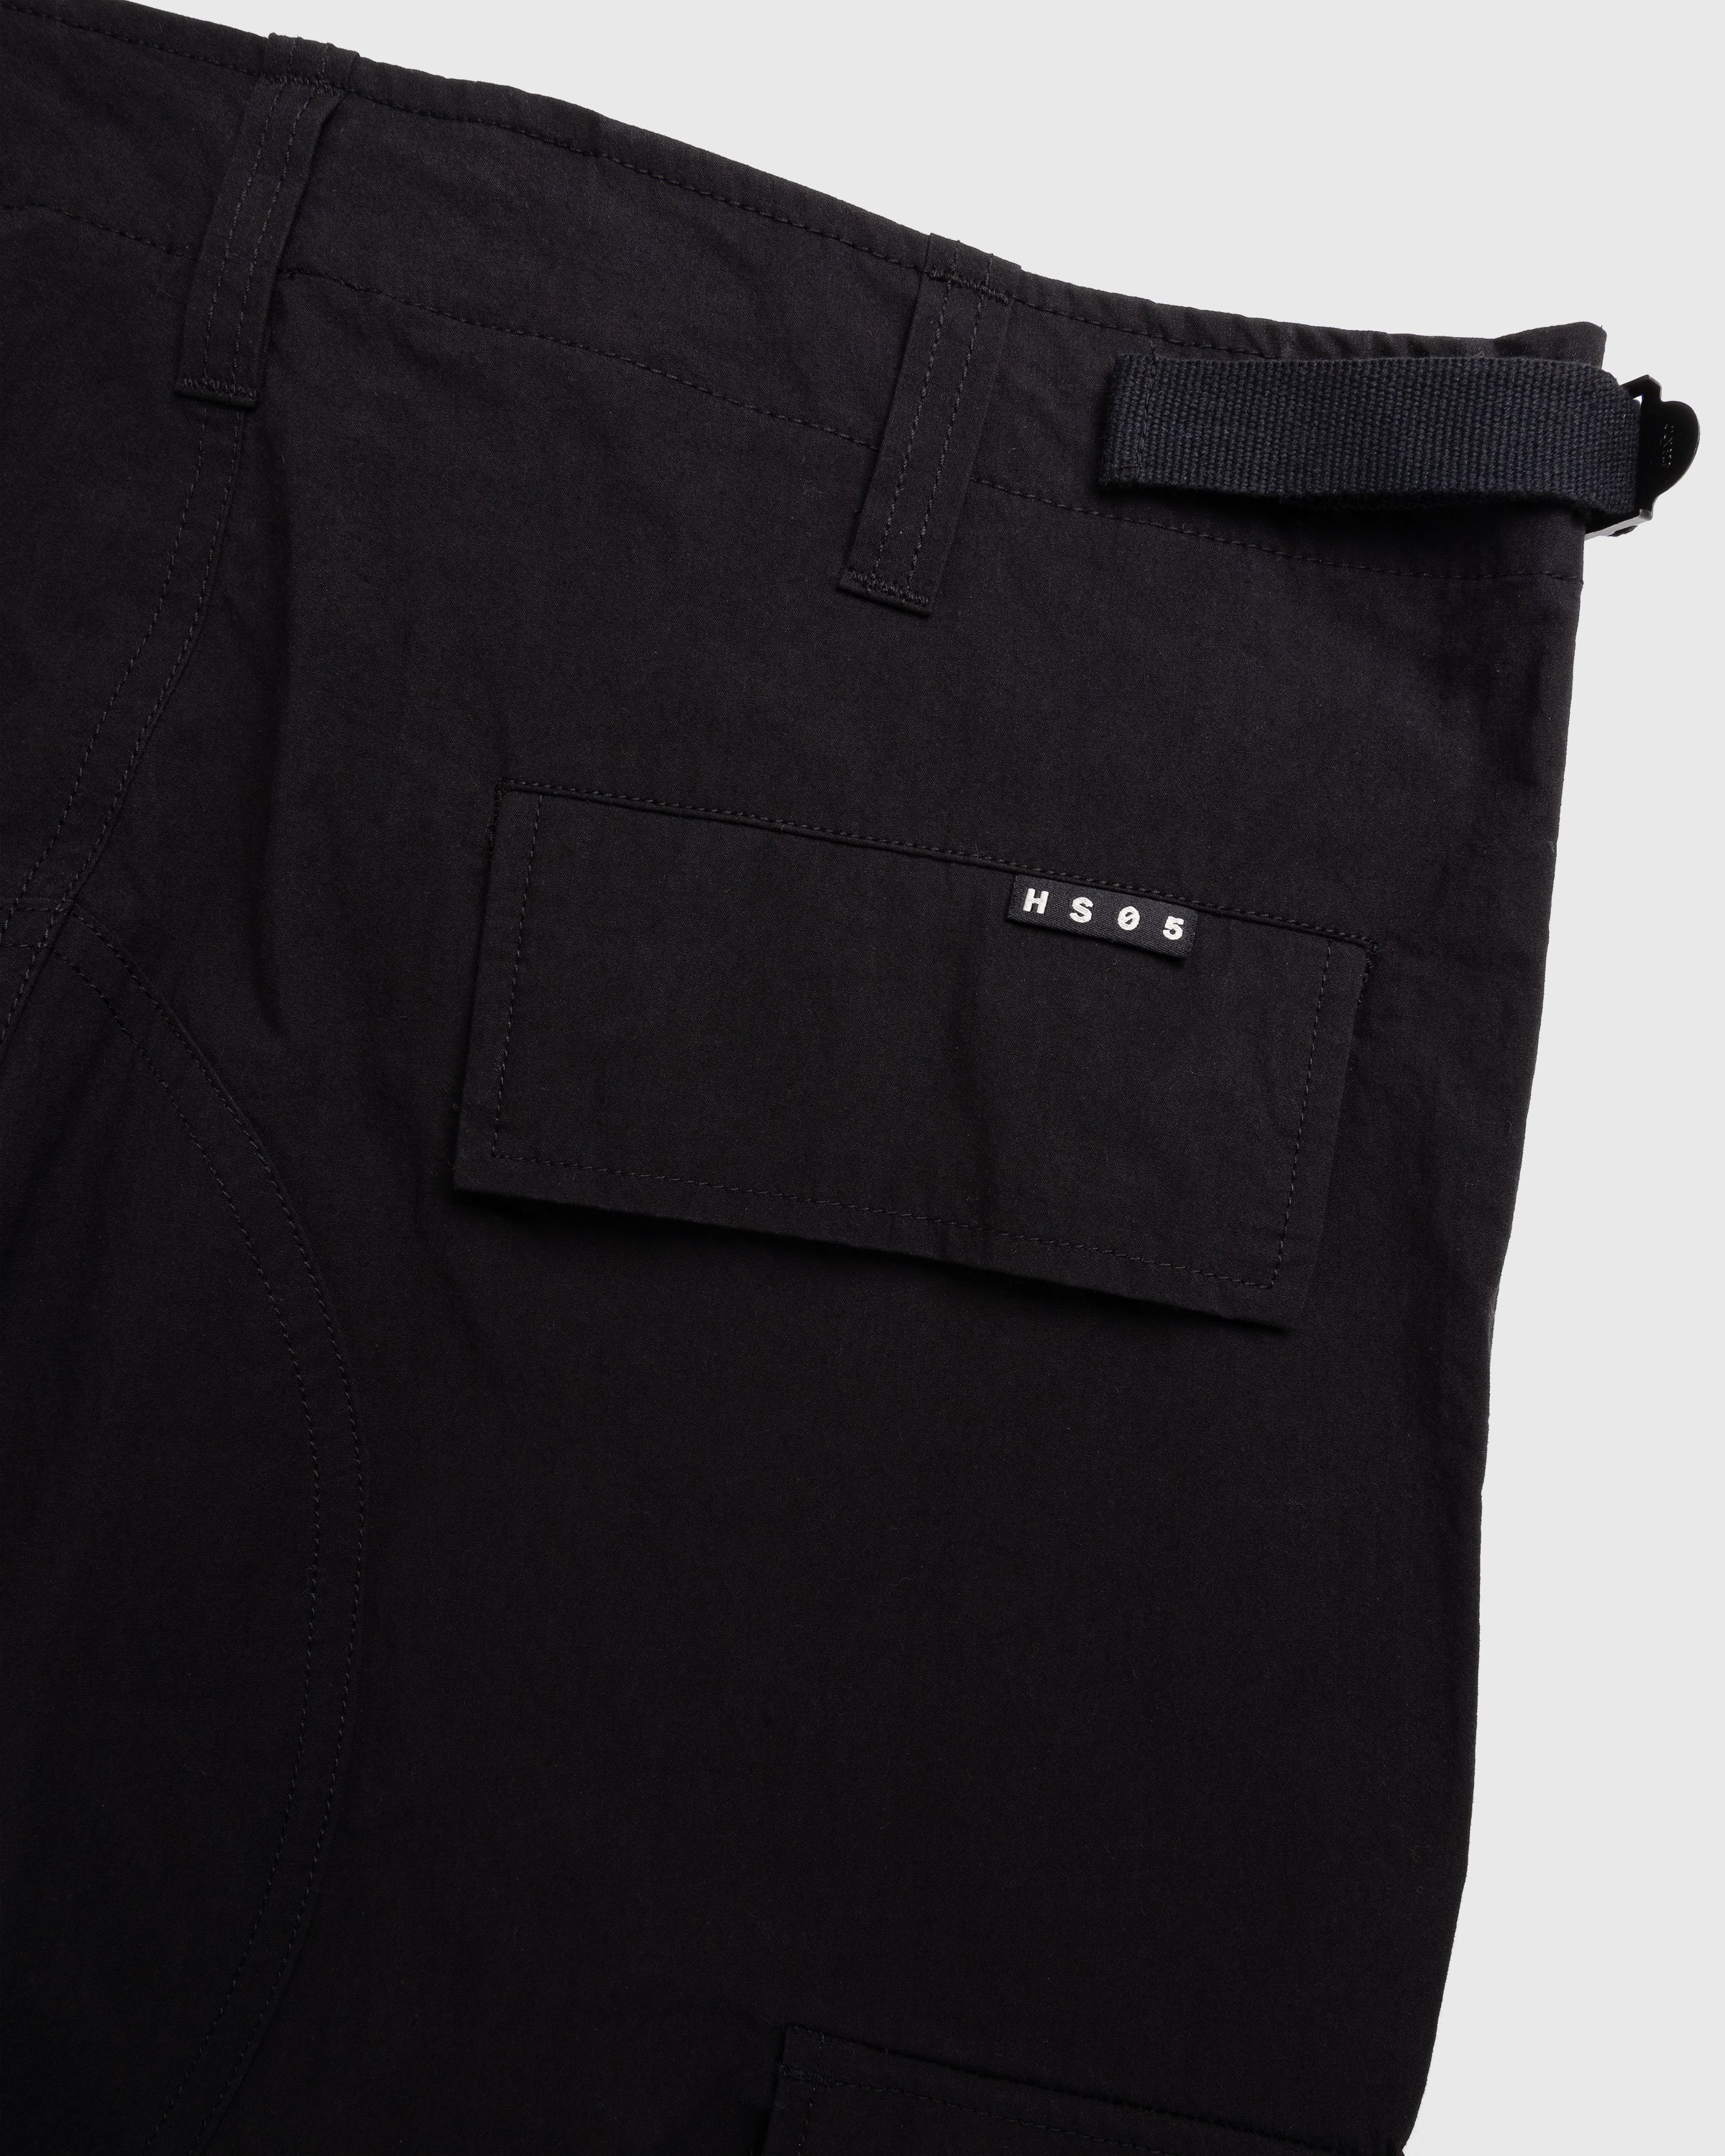 Highsnobiety HS05 - Re-Inforced Nylon Cargo Trouser Black - Clothing - Black - Image 7